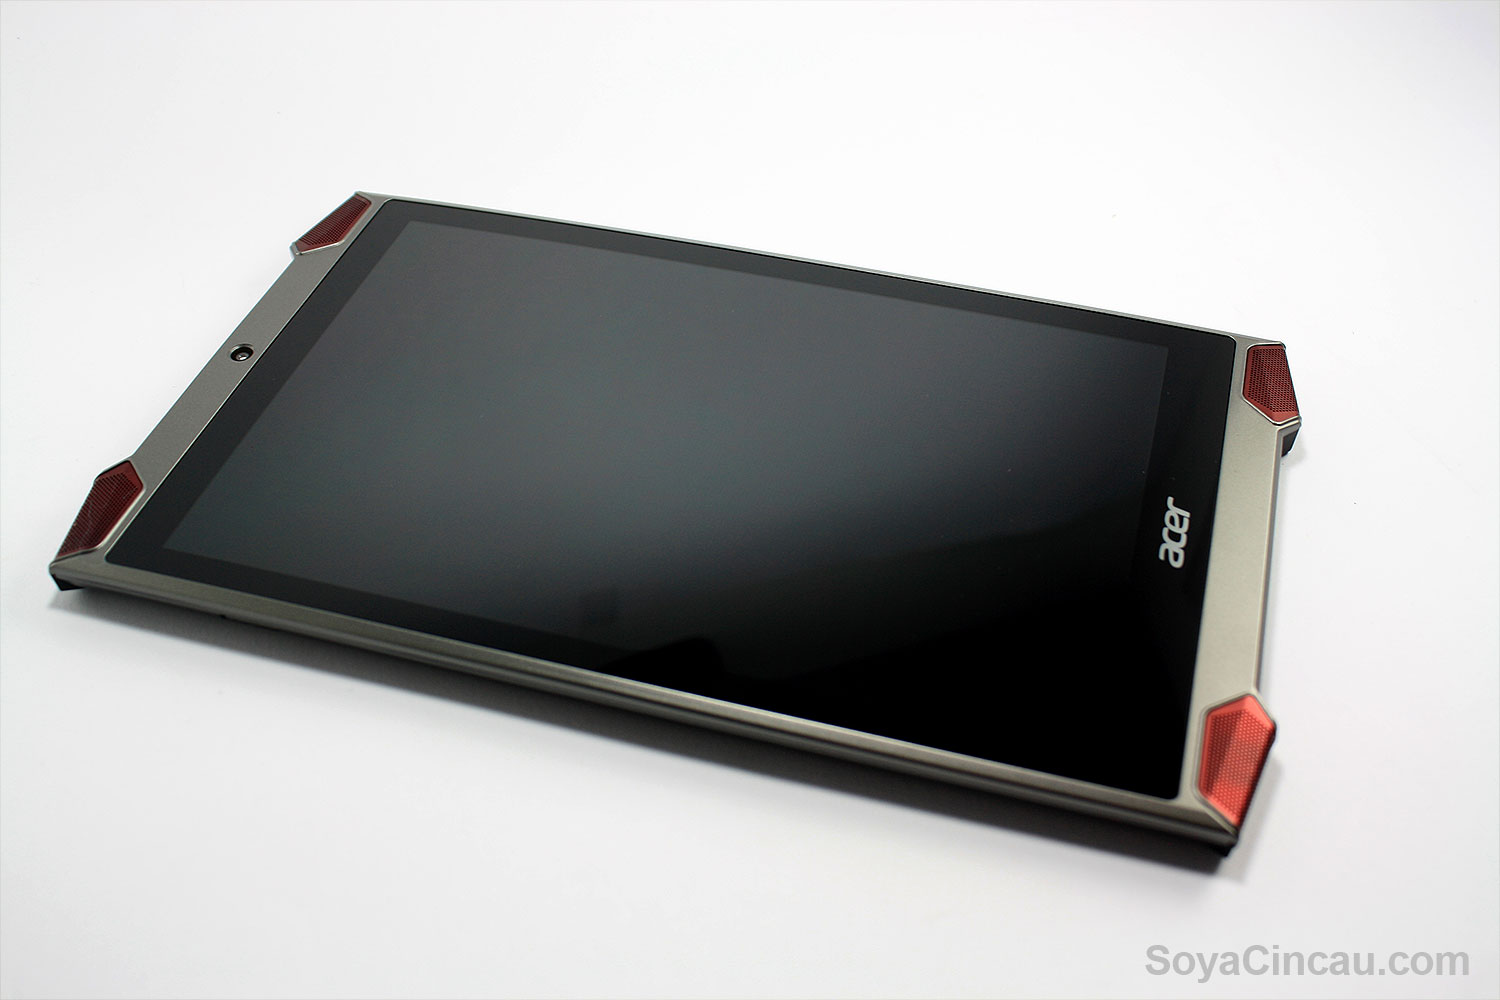 160122-Acer-Predator-Tablet-Review-03